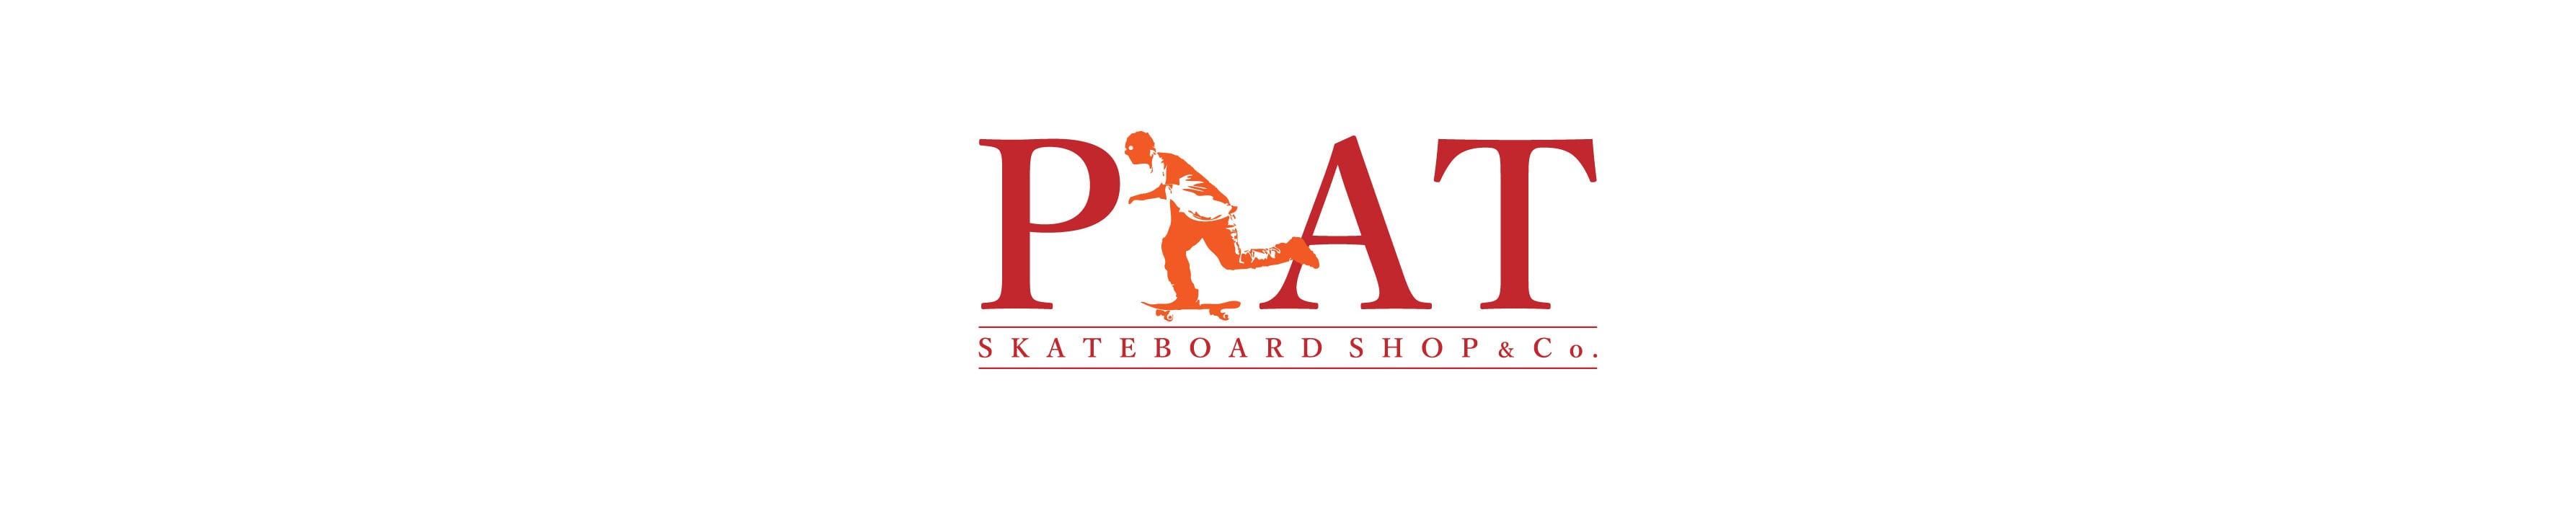 PLAT SKATEBOARD SHOP & Co.